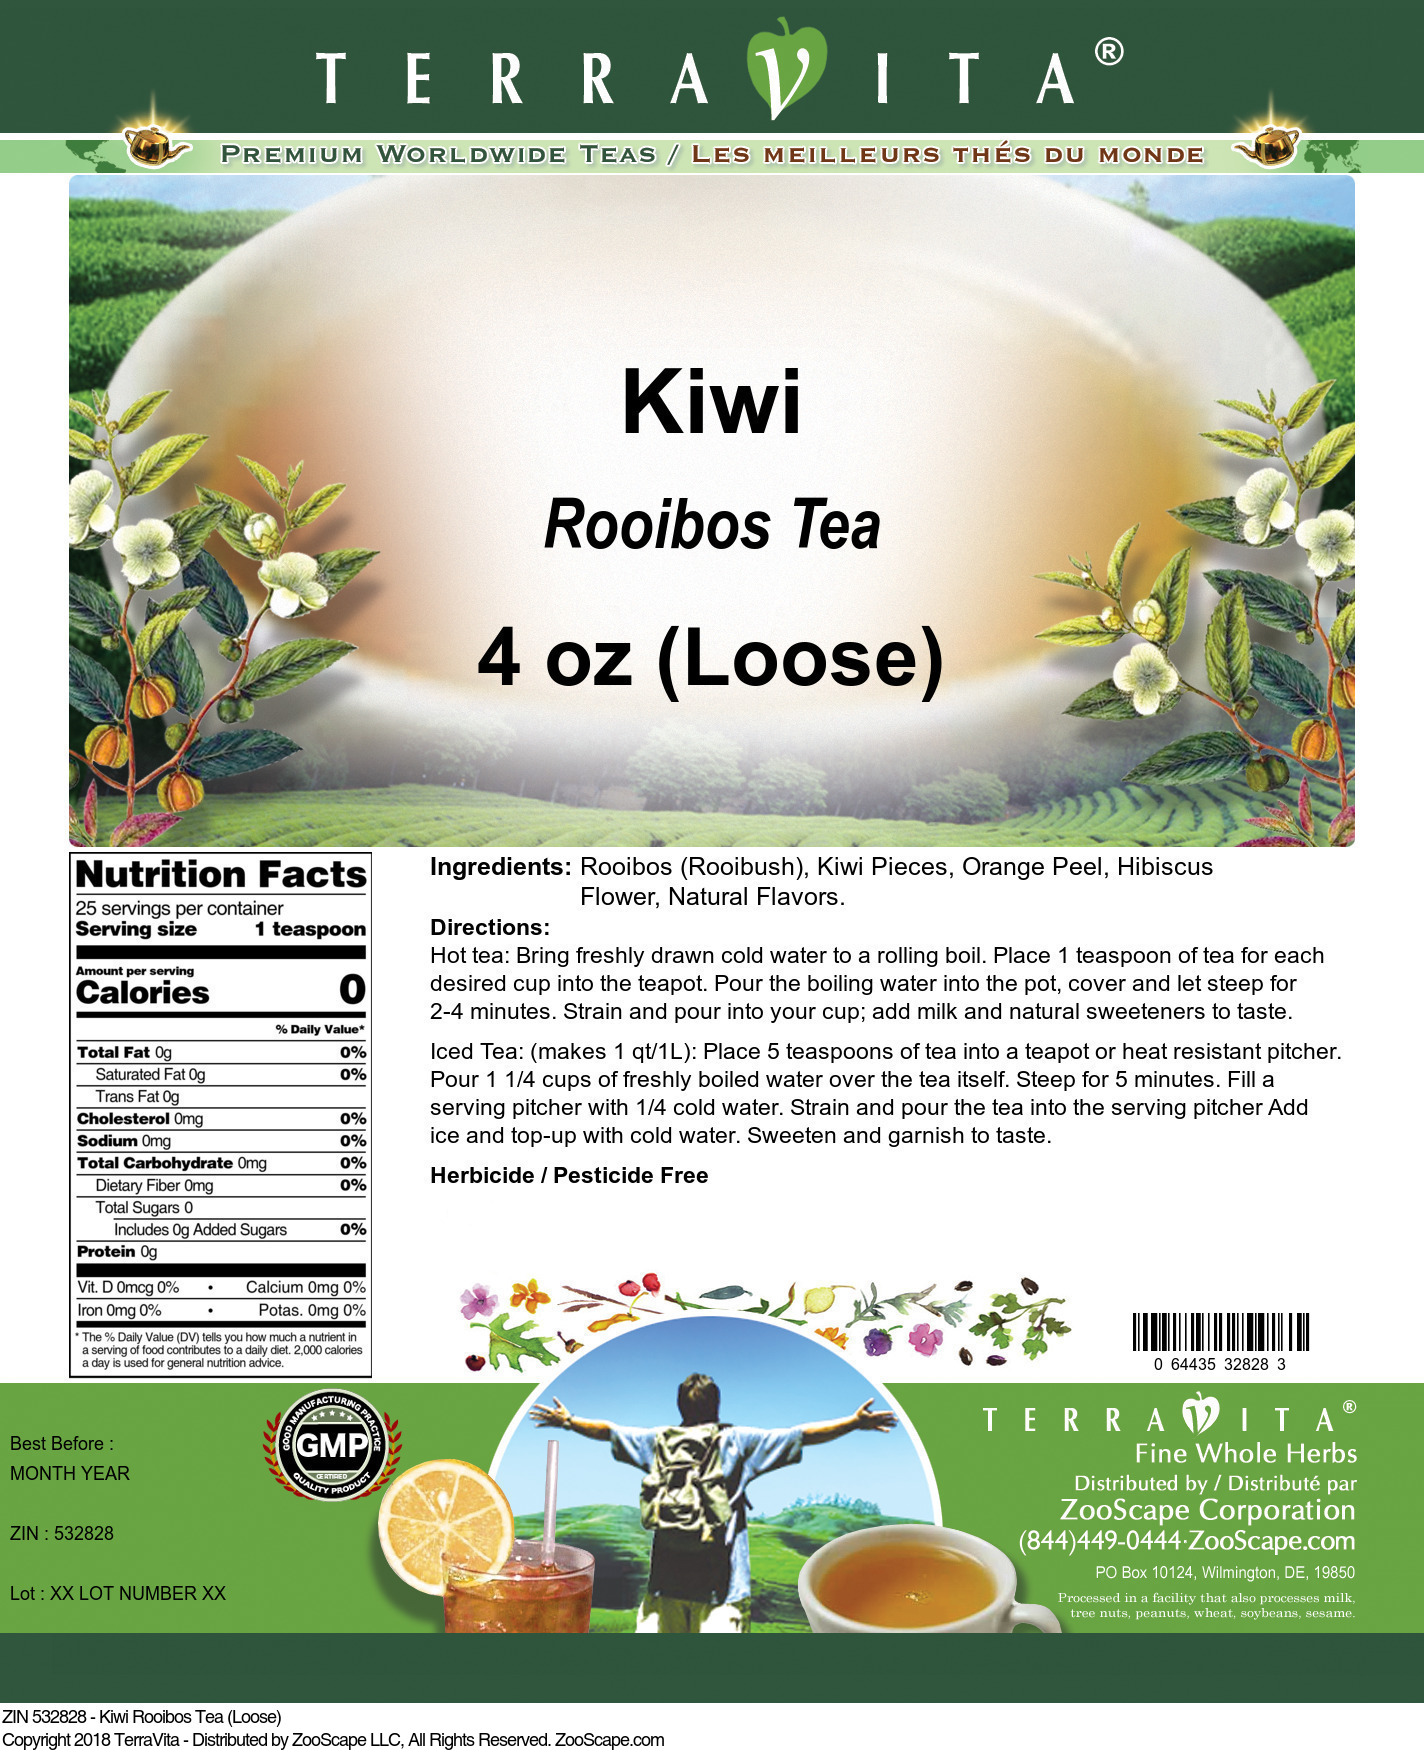 Kiwi Rooibos Tea (Loose) - Label